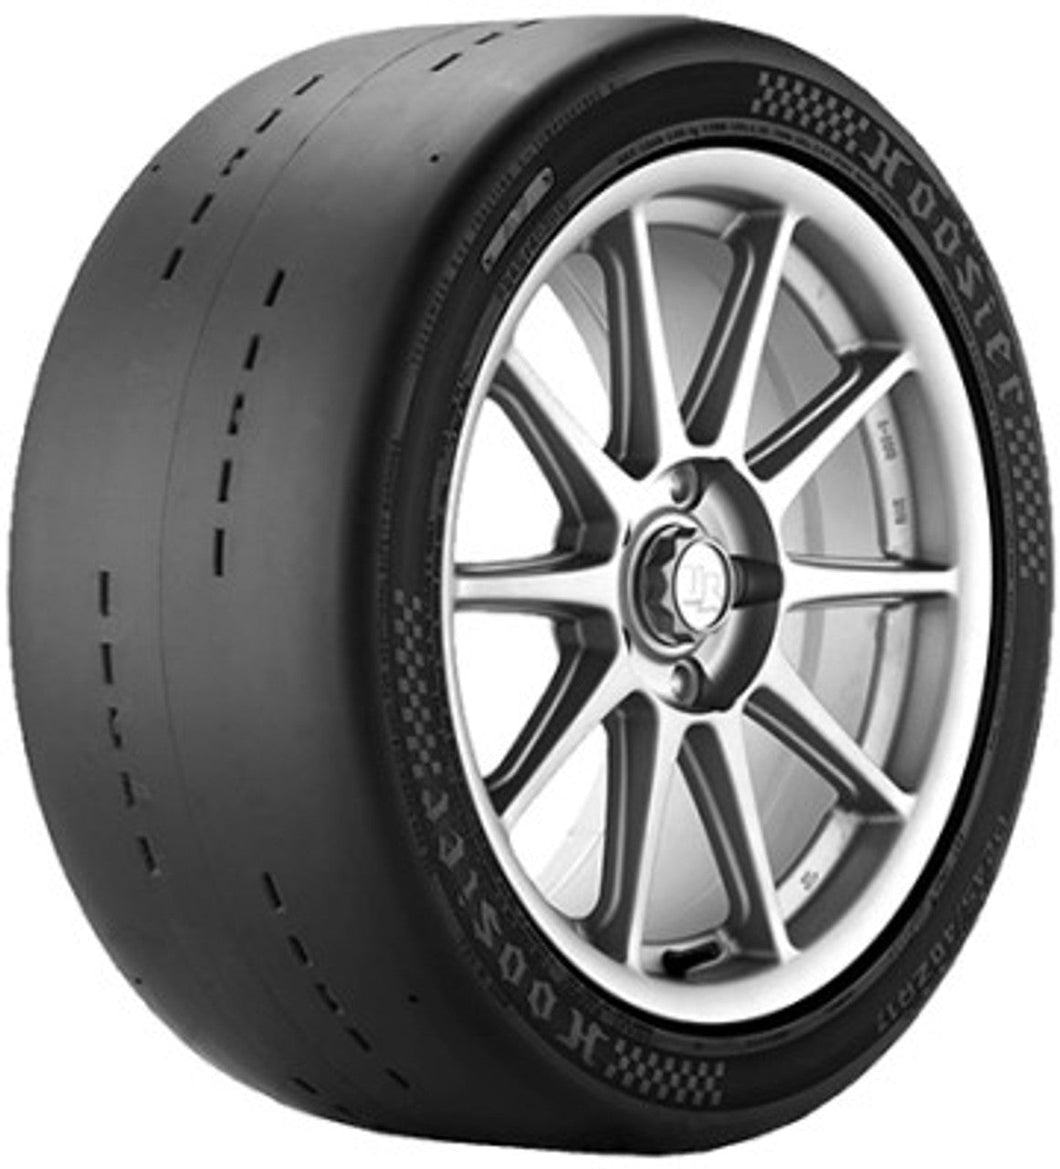 275/35 ZR15 Hoosier Tire Slick D.O.T Neumático